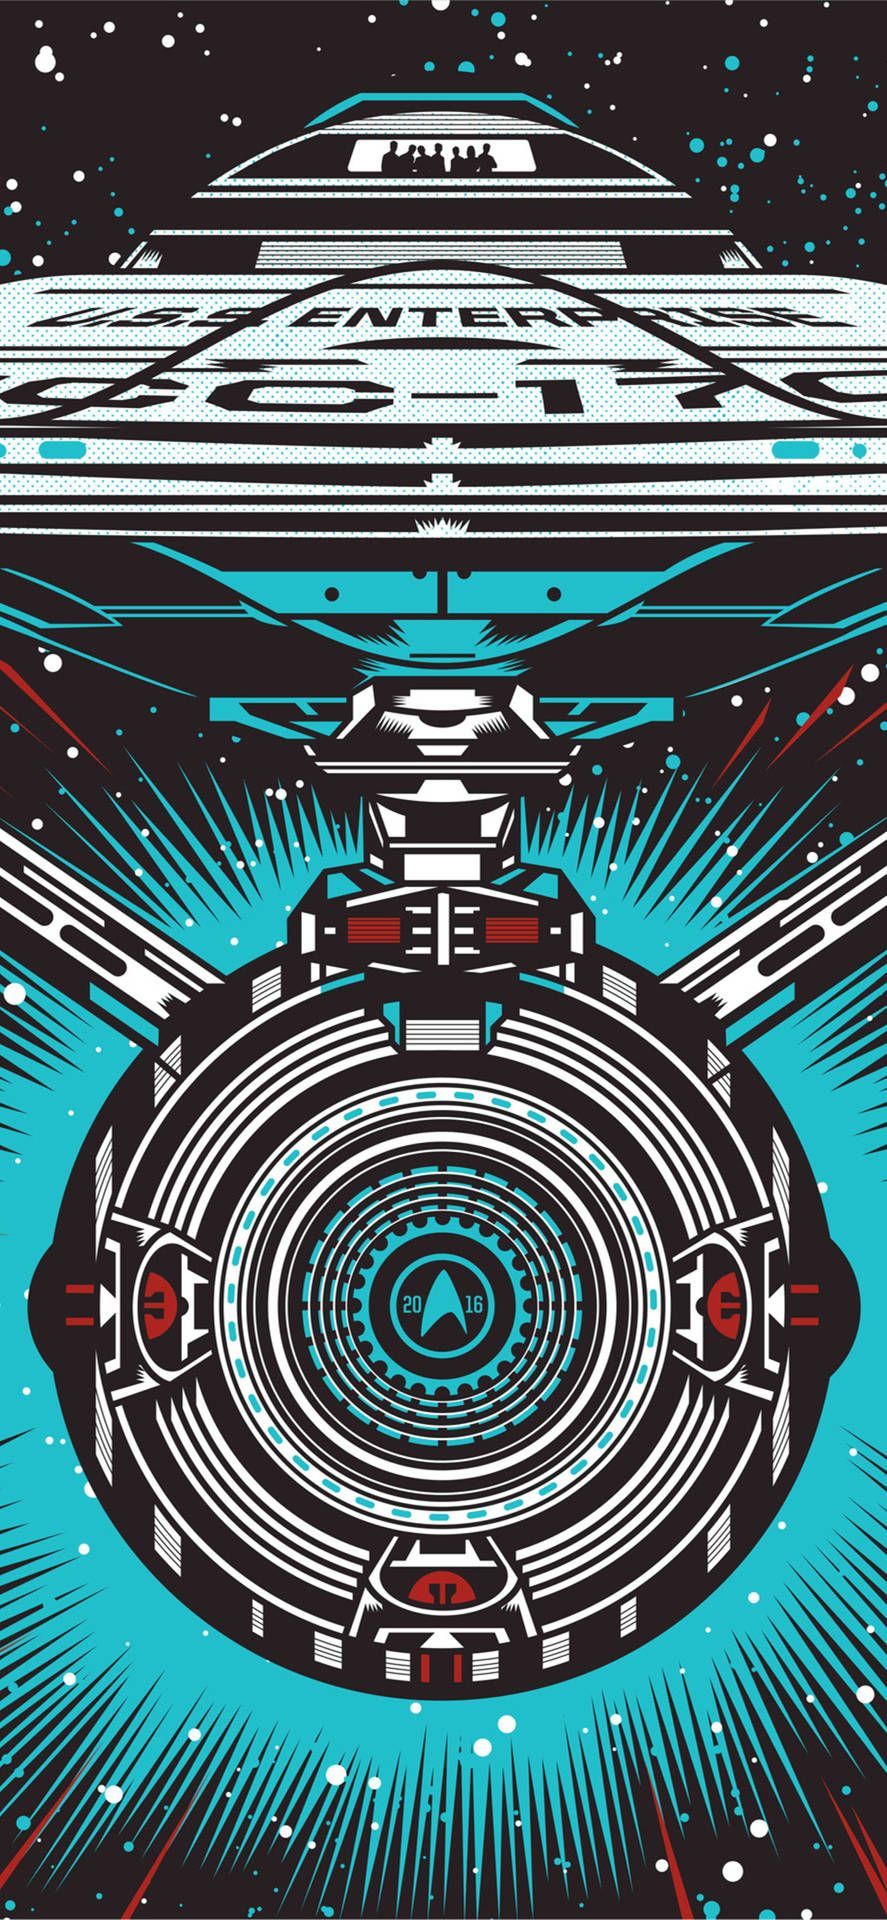 Download Star Trek iPhone Retro Art Wallpaper